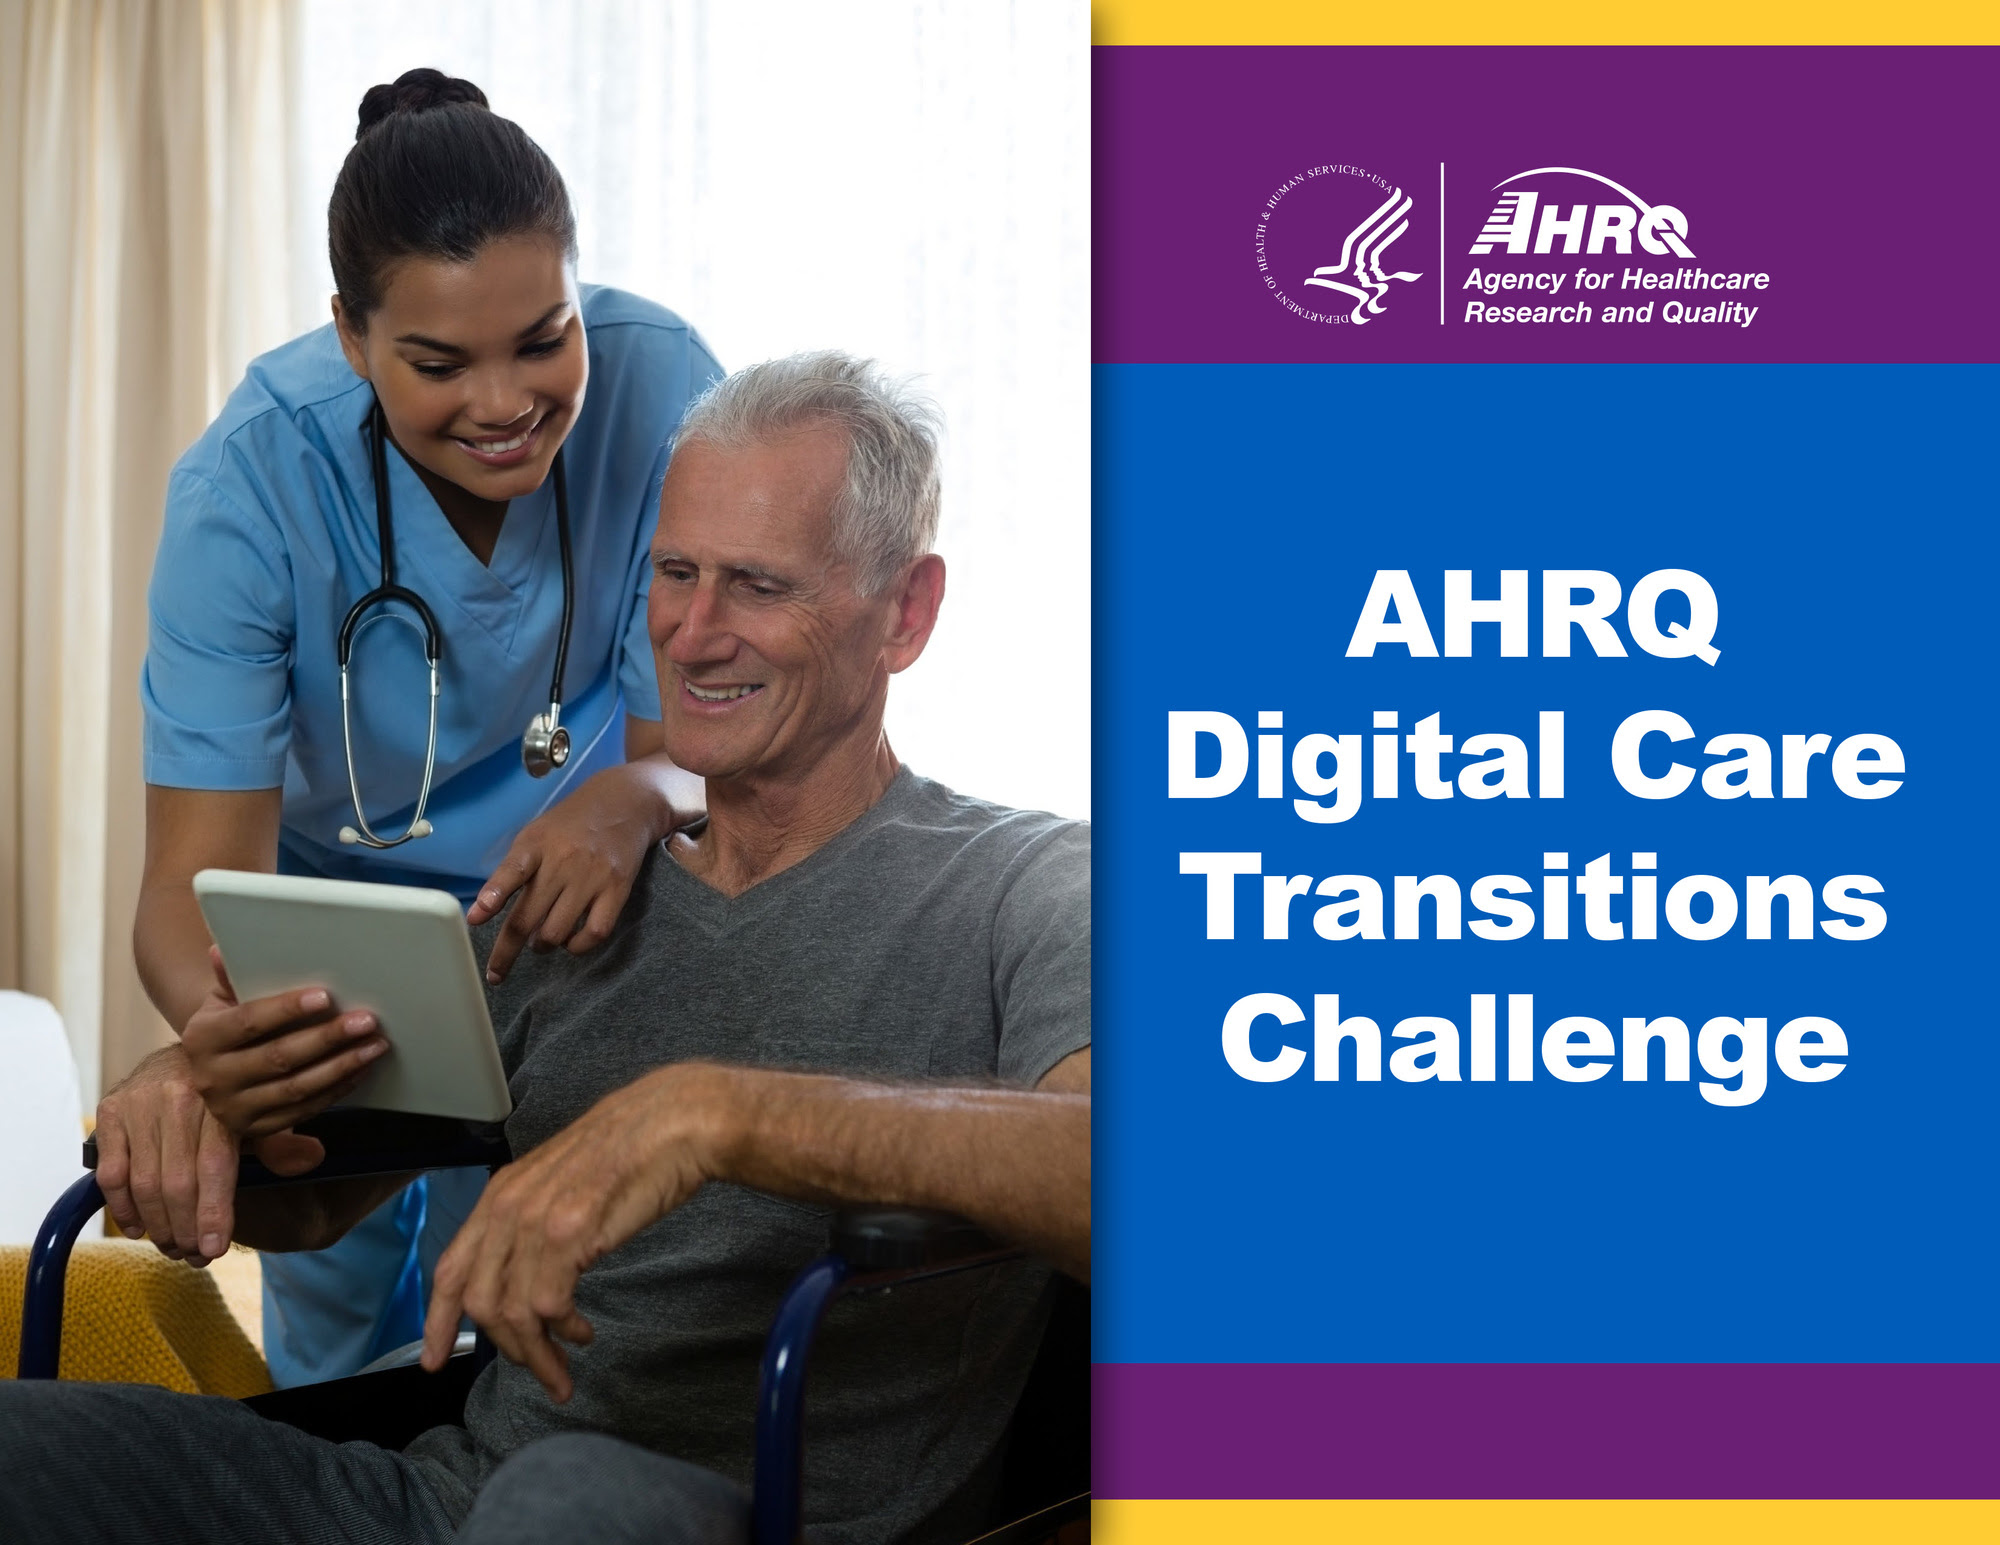 AHRQ Digital Care Transitions Challenge